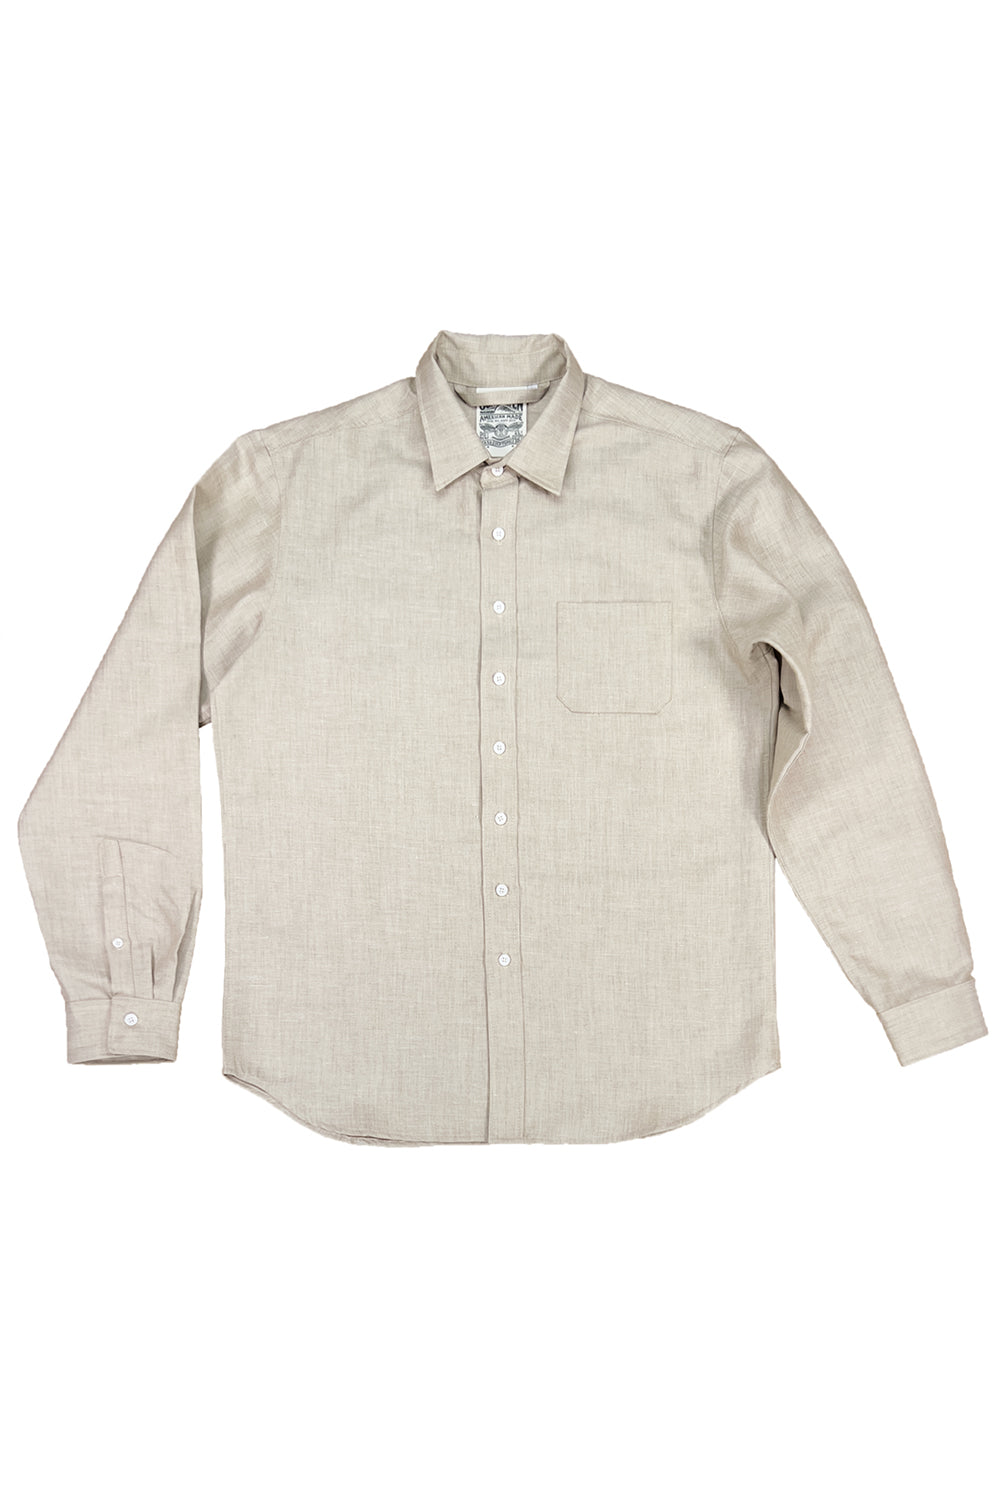 Hampton Shirt | Jungmaven Hemp Clothing & Accessories / Color: Canvas